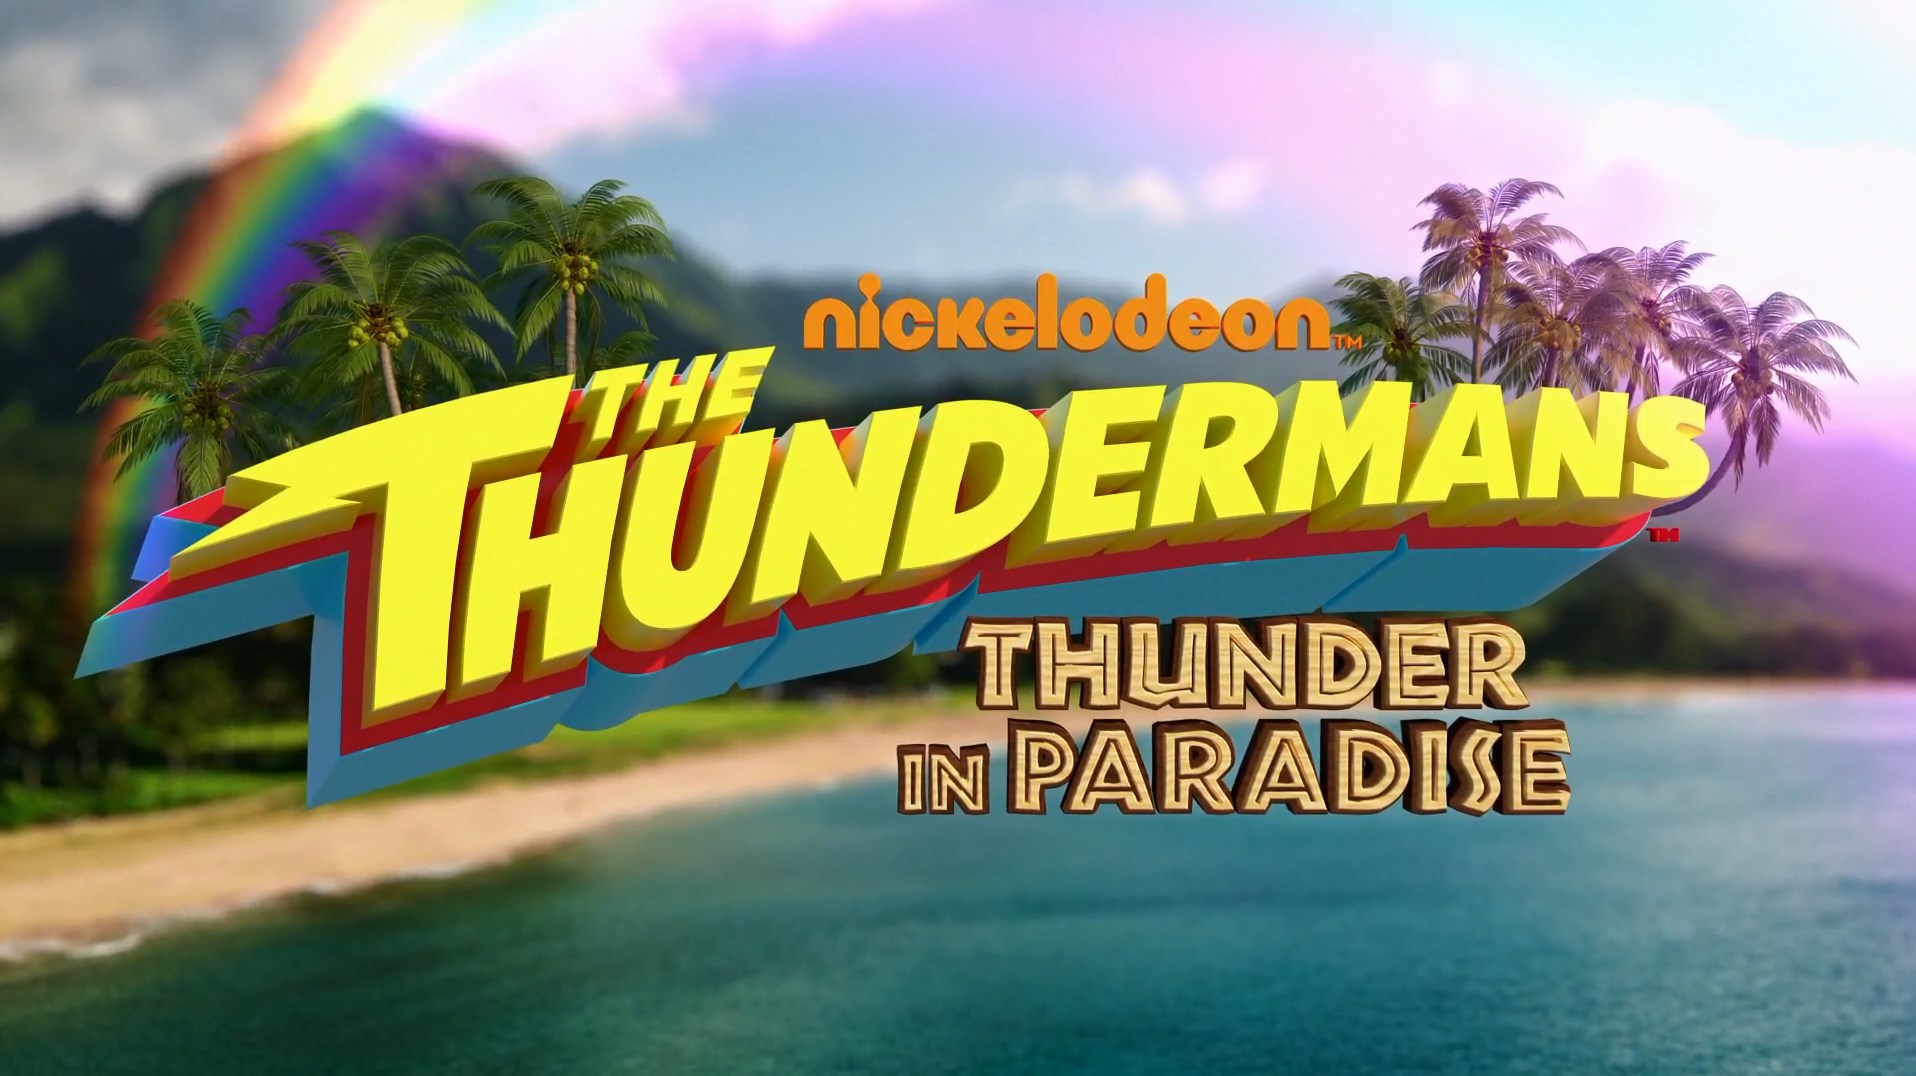 J-14  Nickelodeon the thundermans, Kira kosarin, Phoebe thunderman